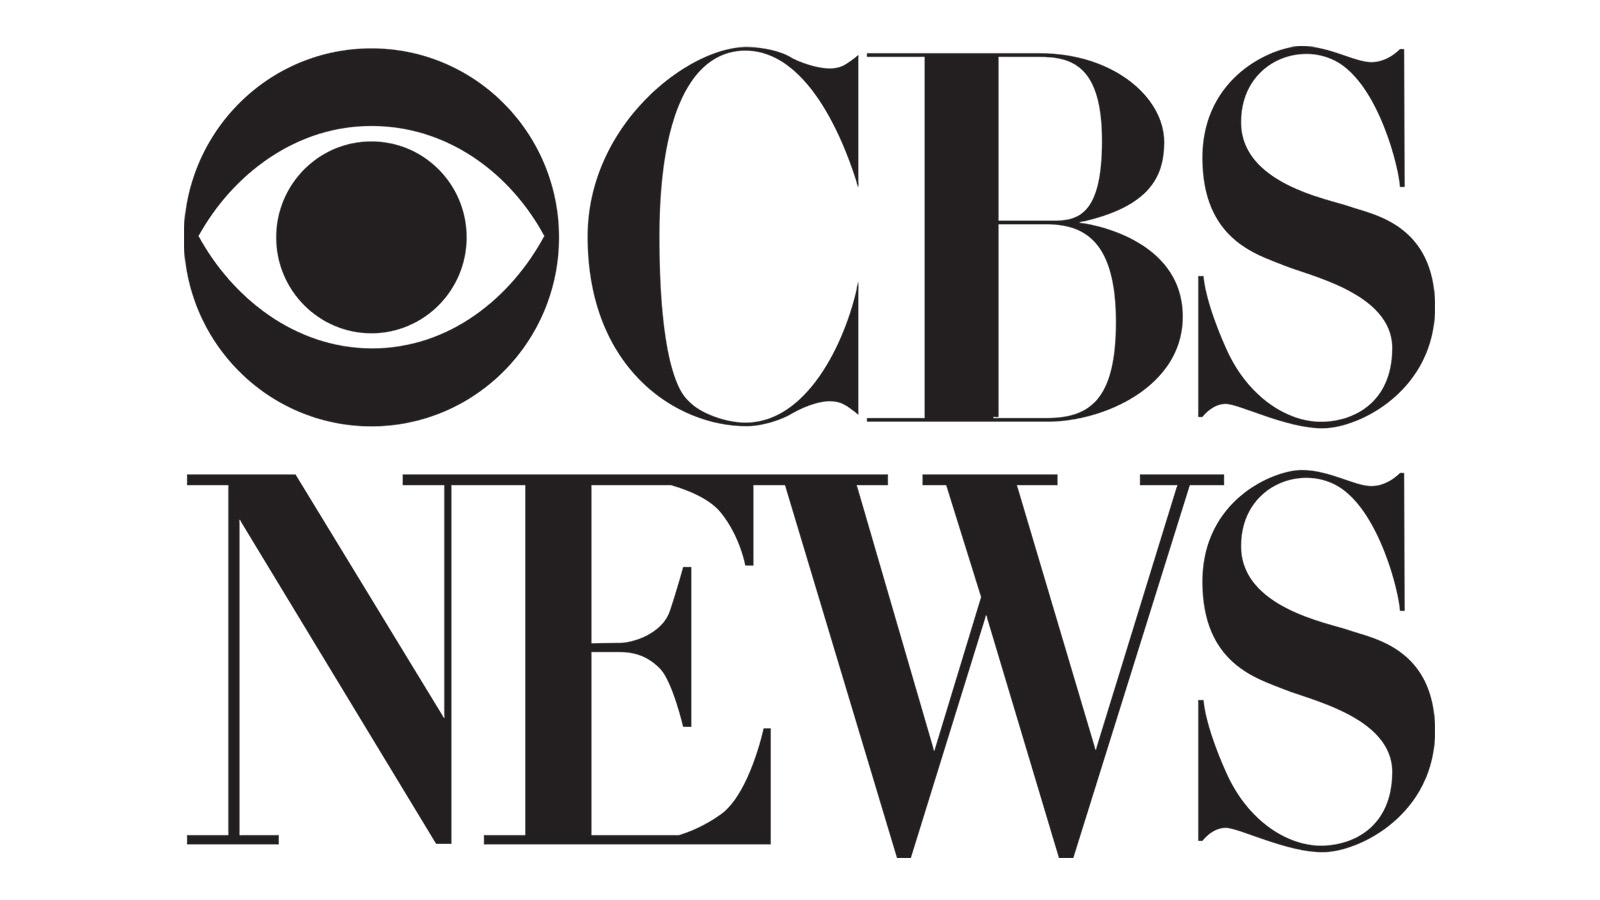 WEB CBS News logo. - Religion News Service